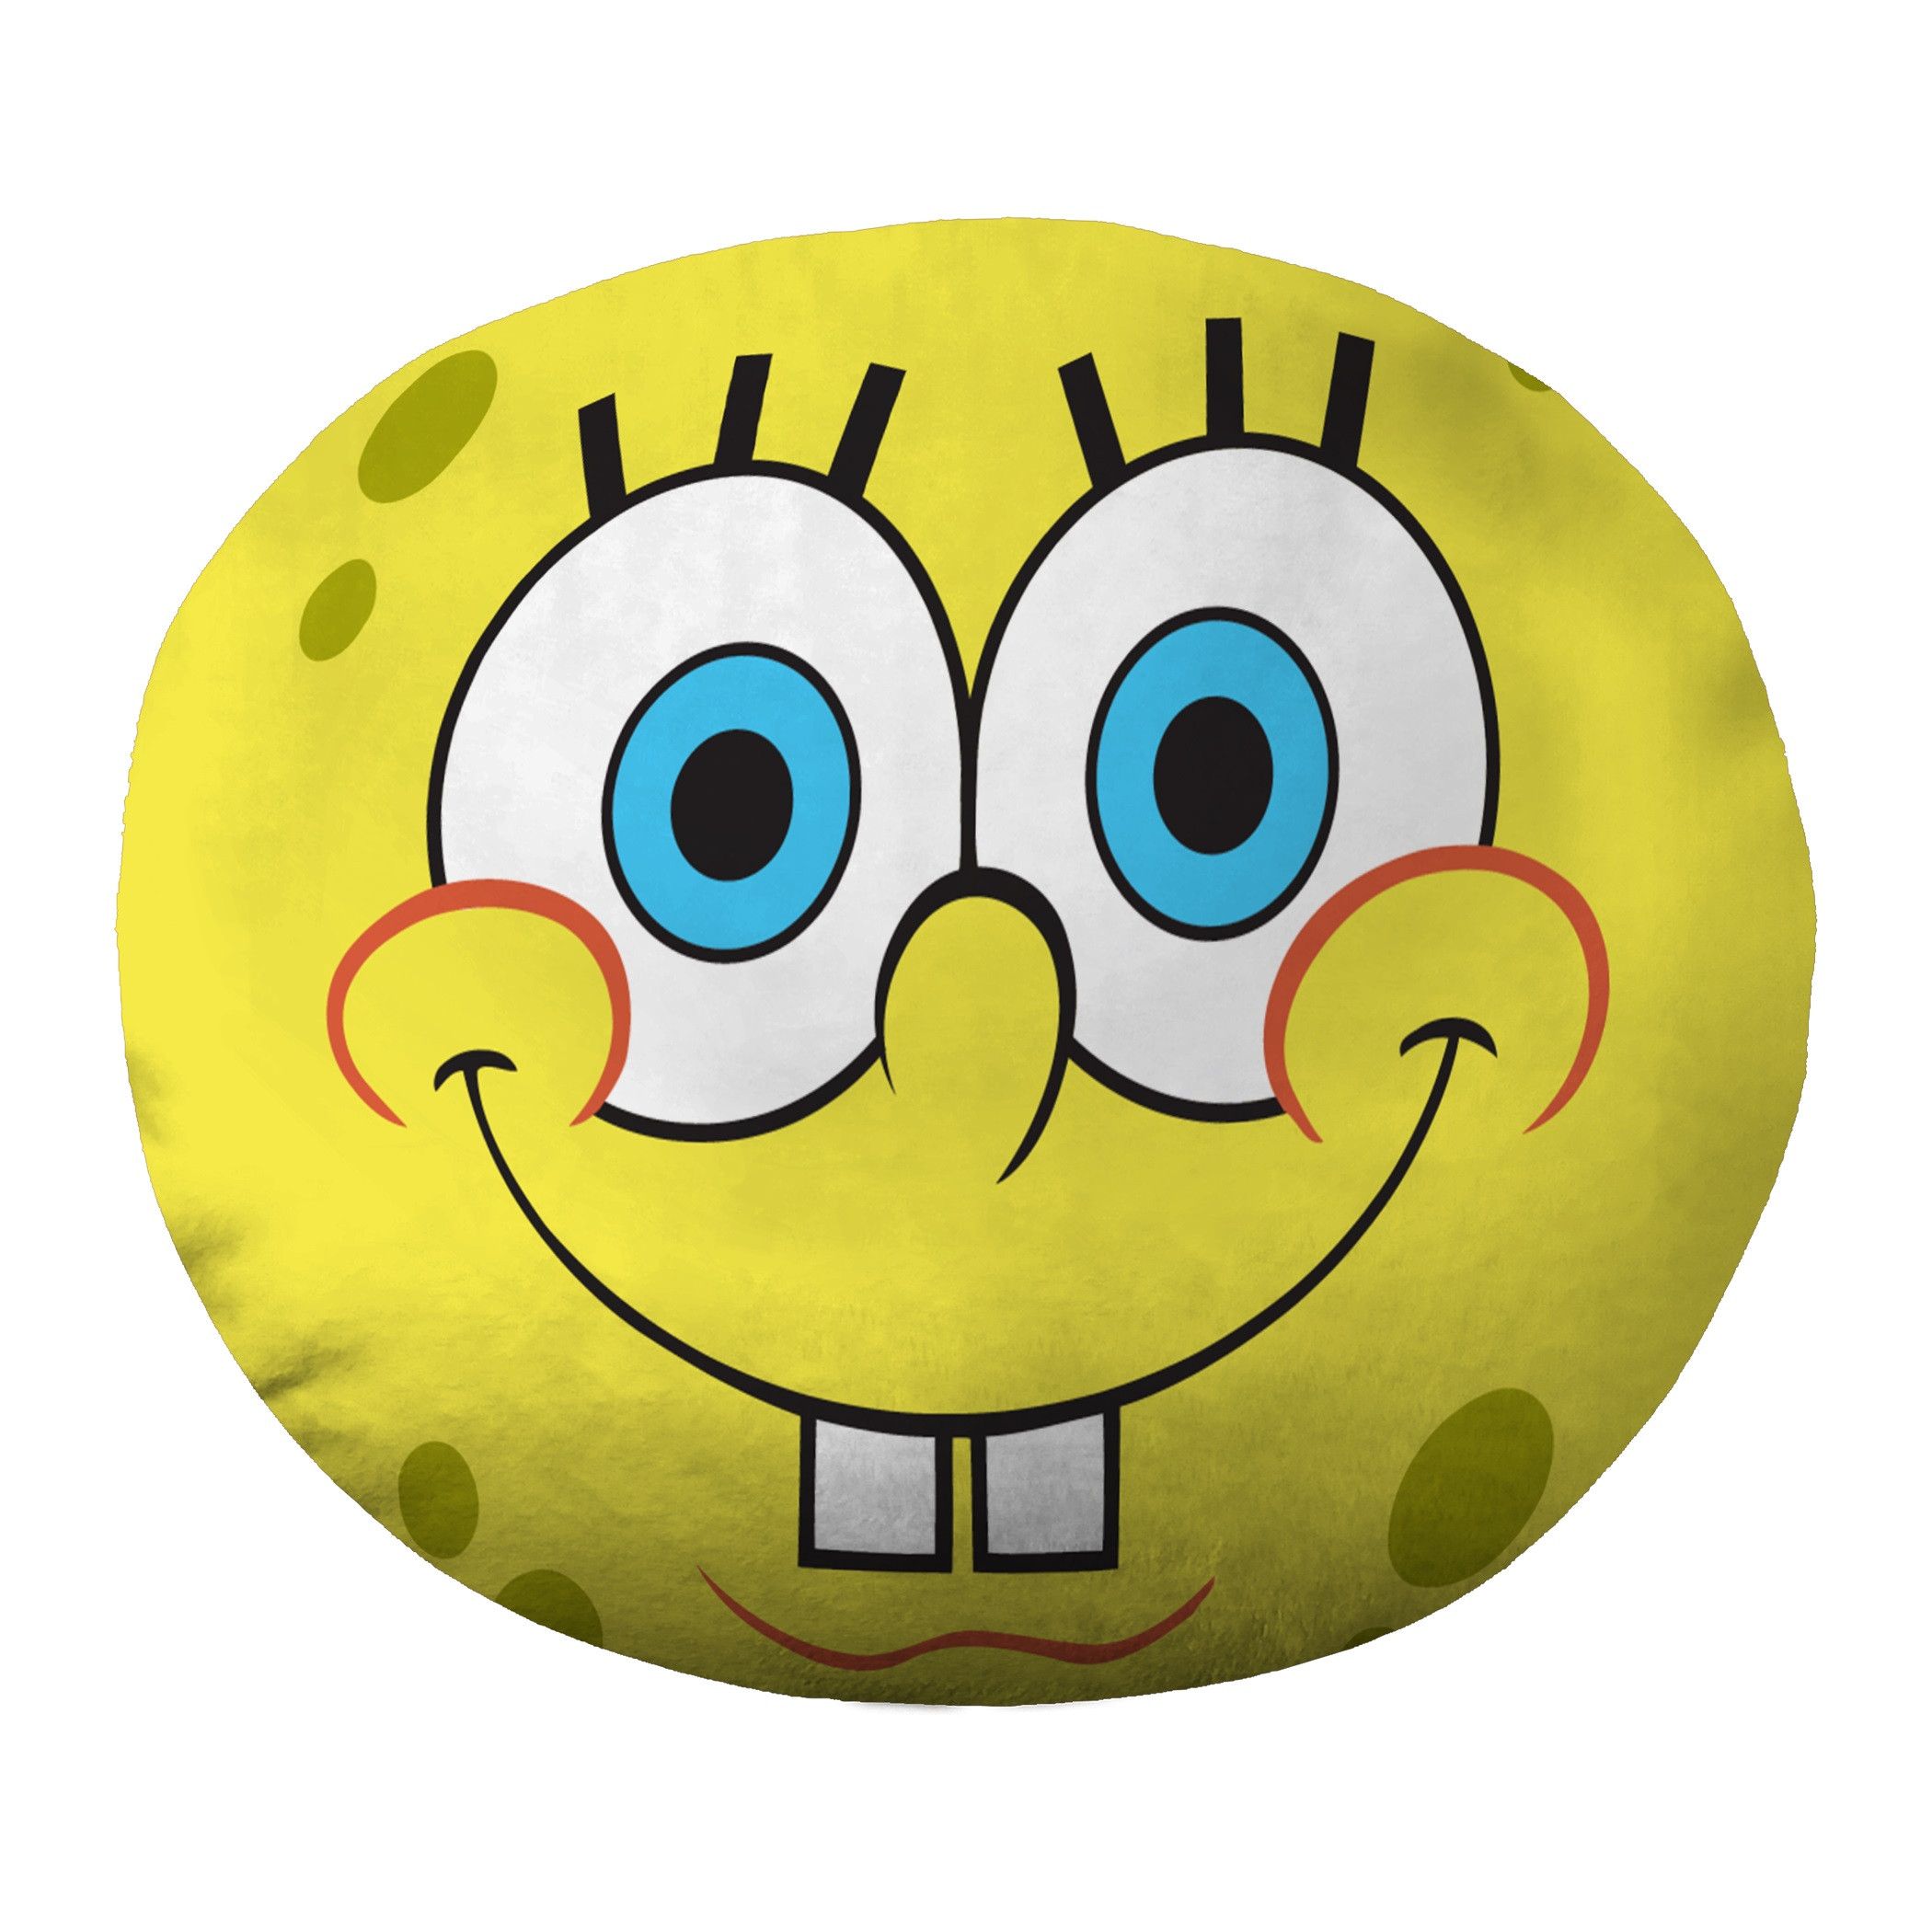 SpongeBob SquarePants 11" Round Cloud Pillow